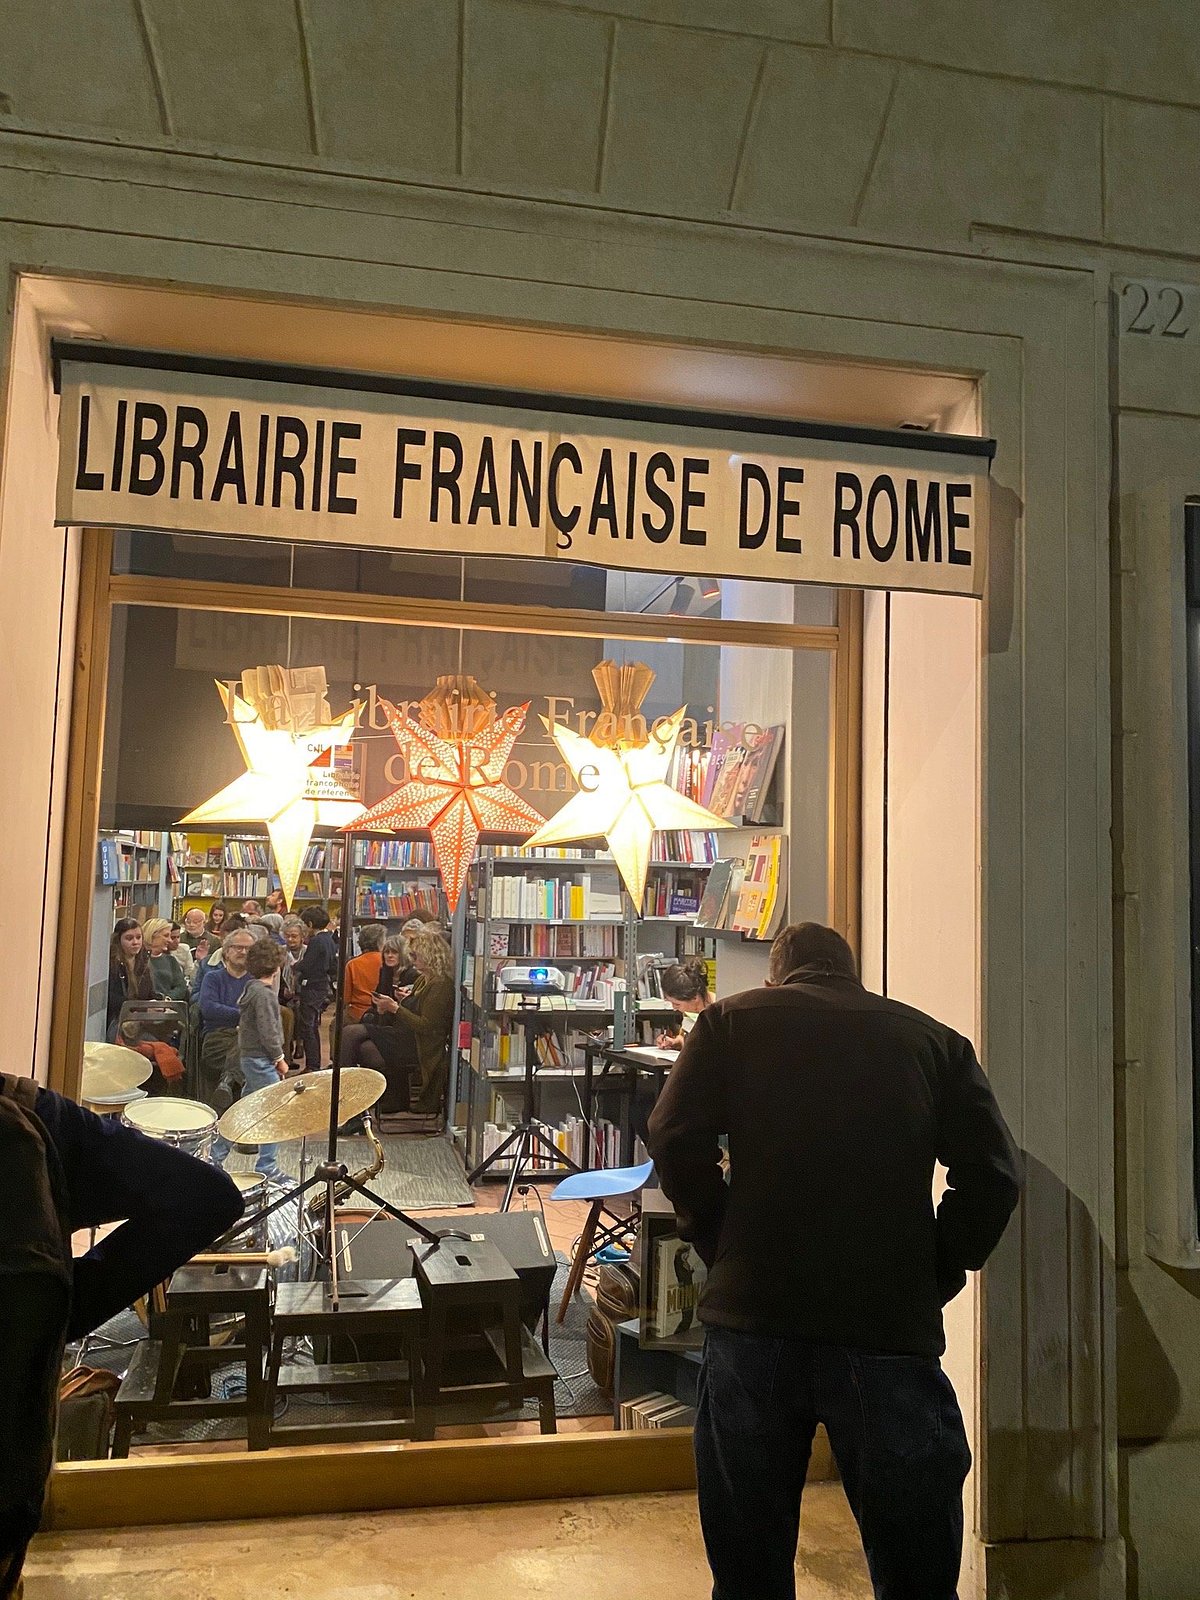 Libreria francese - Ile de France a Milano - Libreria - Itinerari turismo 